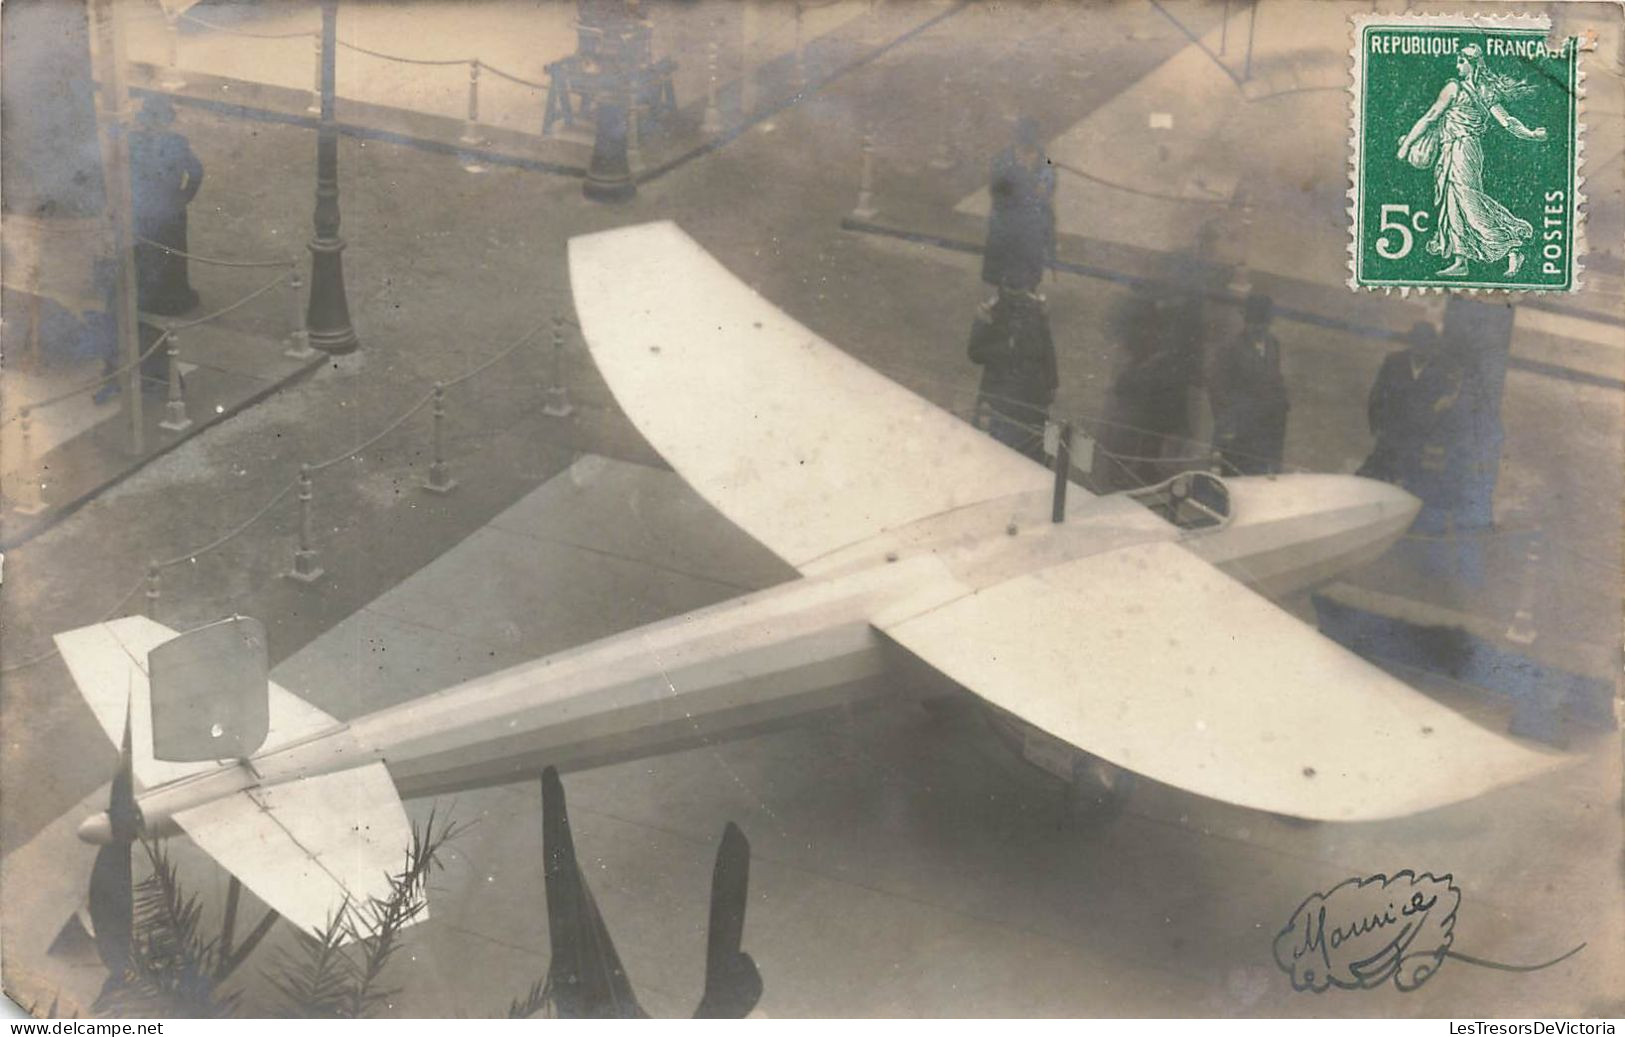 CARTE PHOTO - Aviation - Exposition - Animé - Carte Postale Ancienne - Fotografía